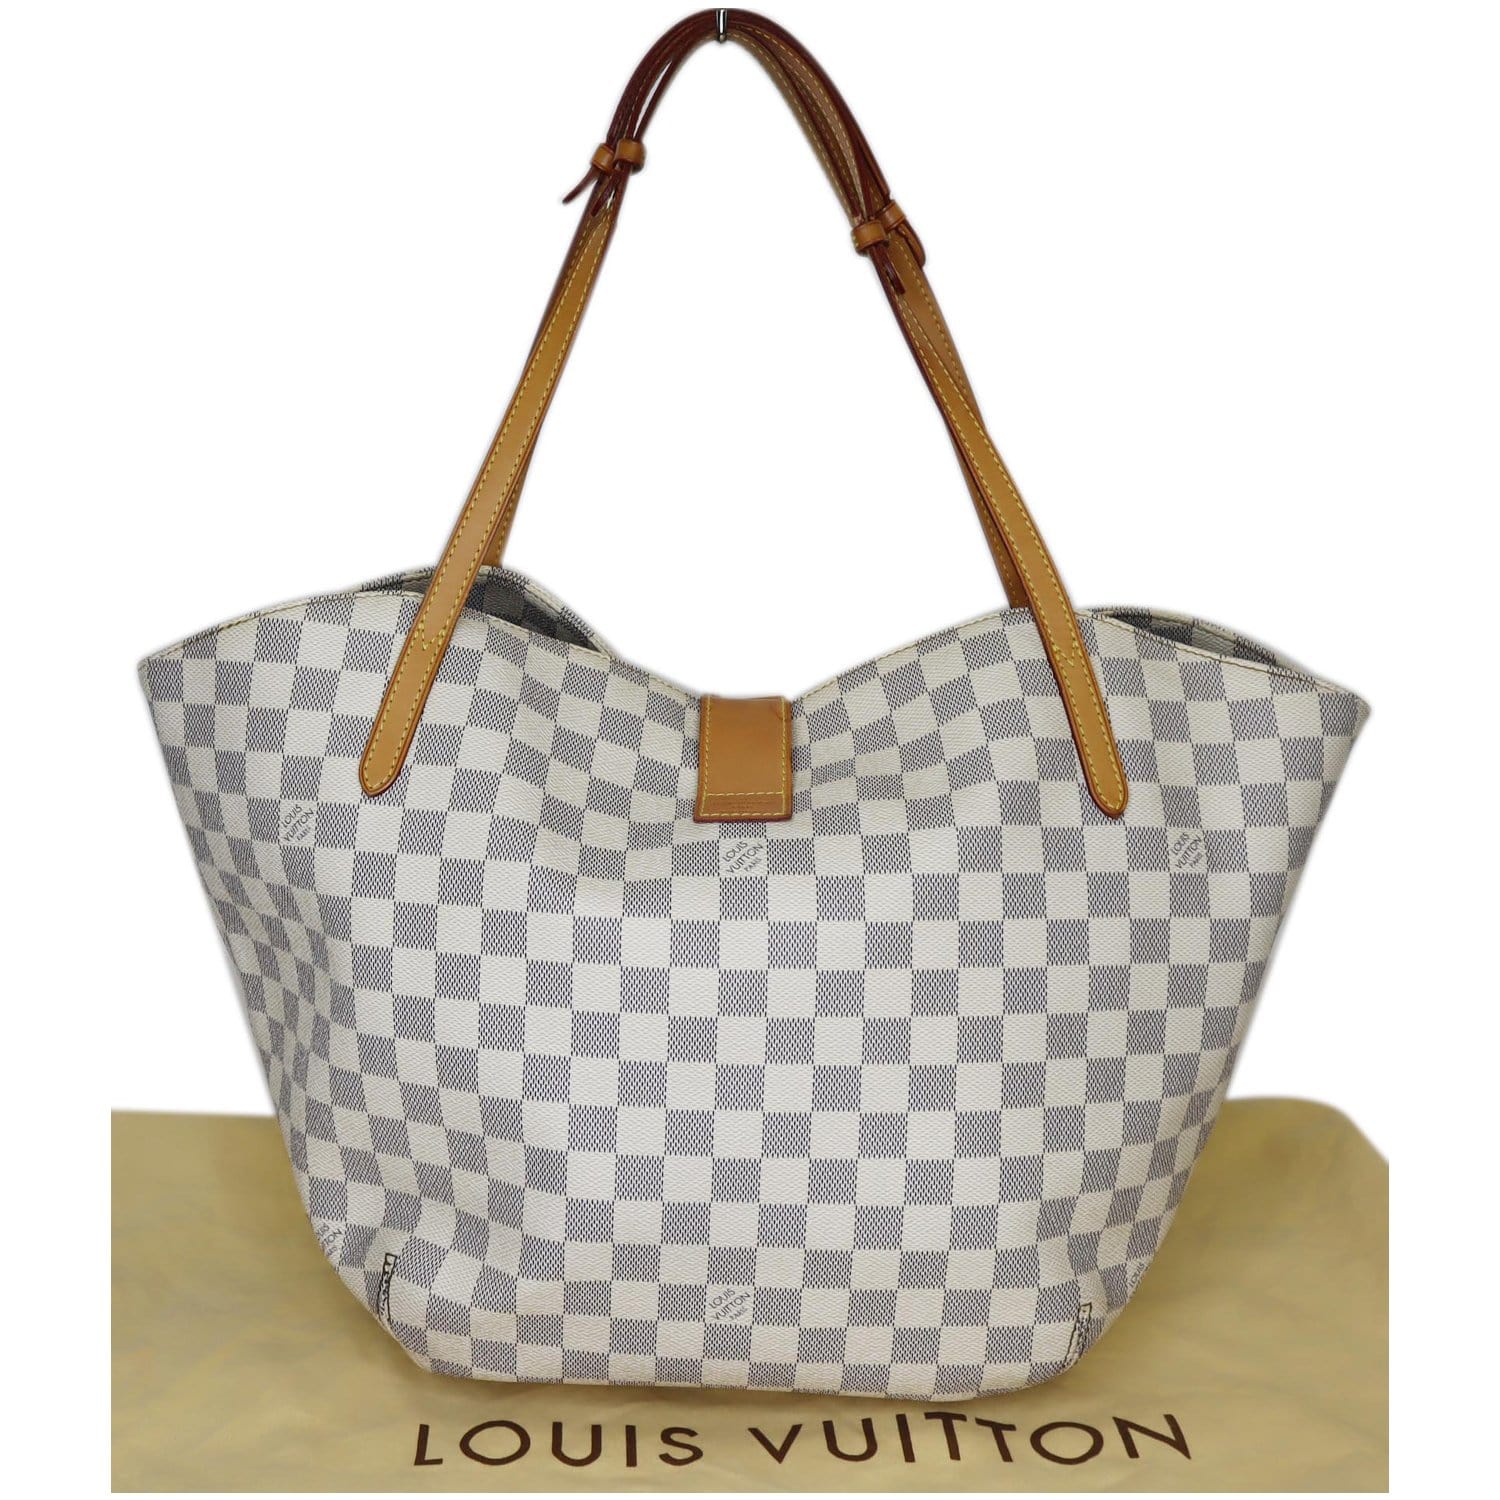 Louis Vuitton Authentic Brand New Damier Azur Bag for Sale in San